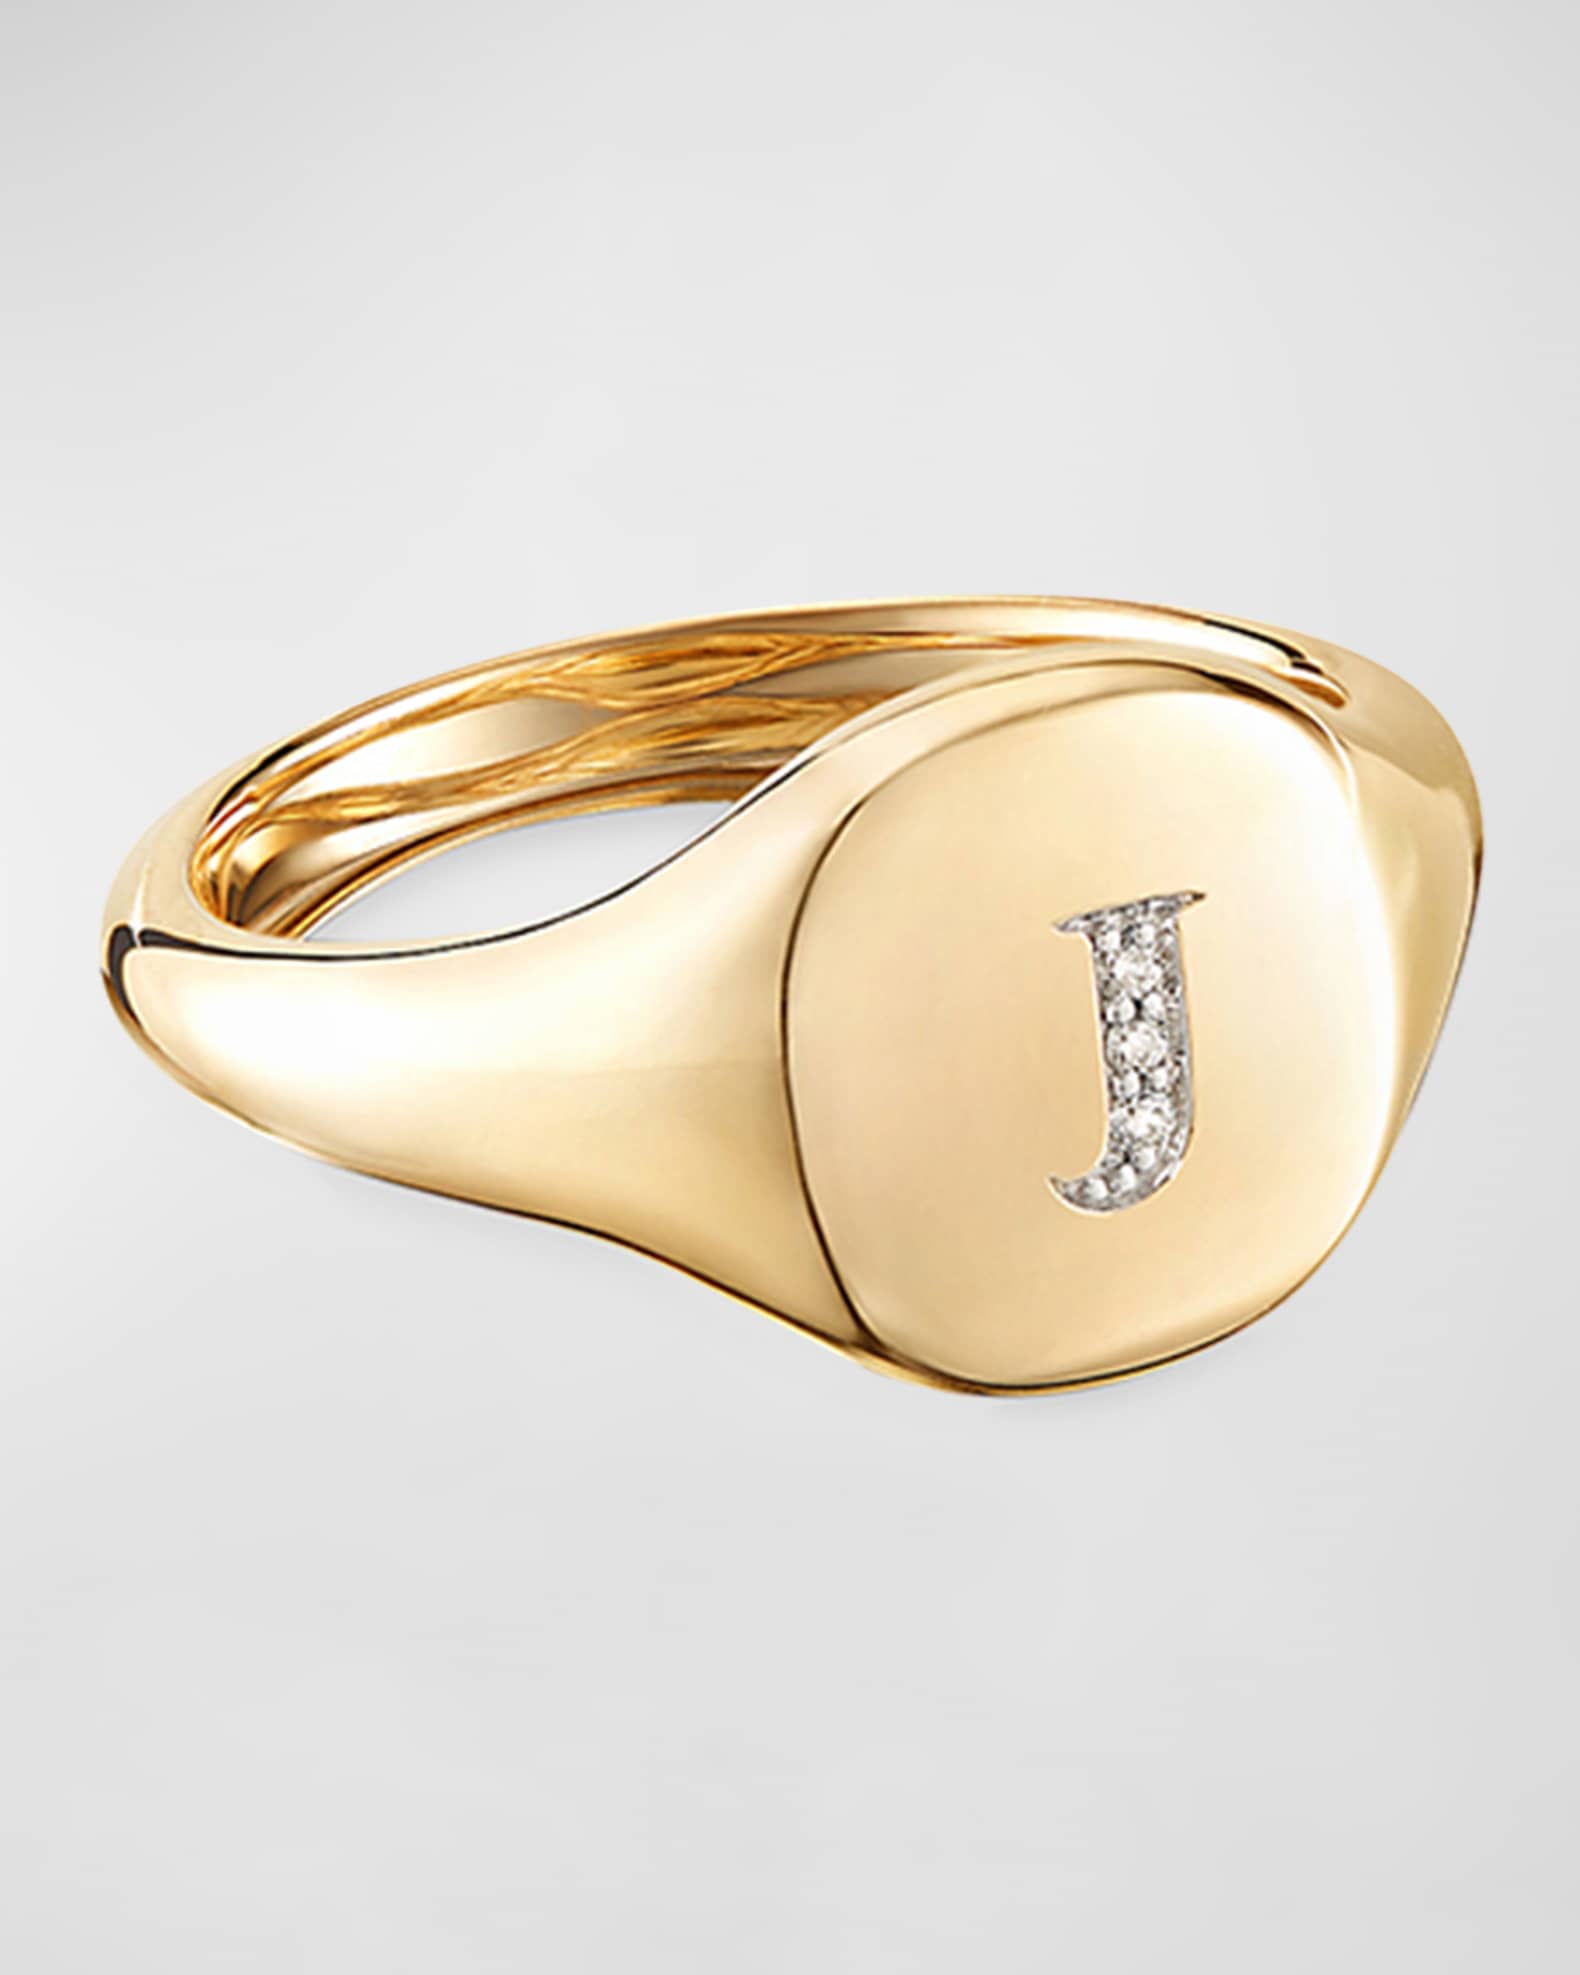 David Yurman Mini DY Initial J Pinky Ring in 18K Yellow Gold with Diamonds, Size 5.5, Women's, Rings Monogram Initial & Alphabet Rings